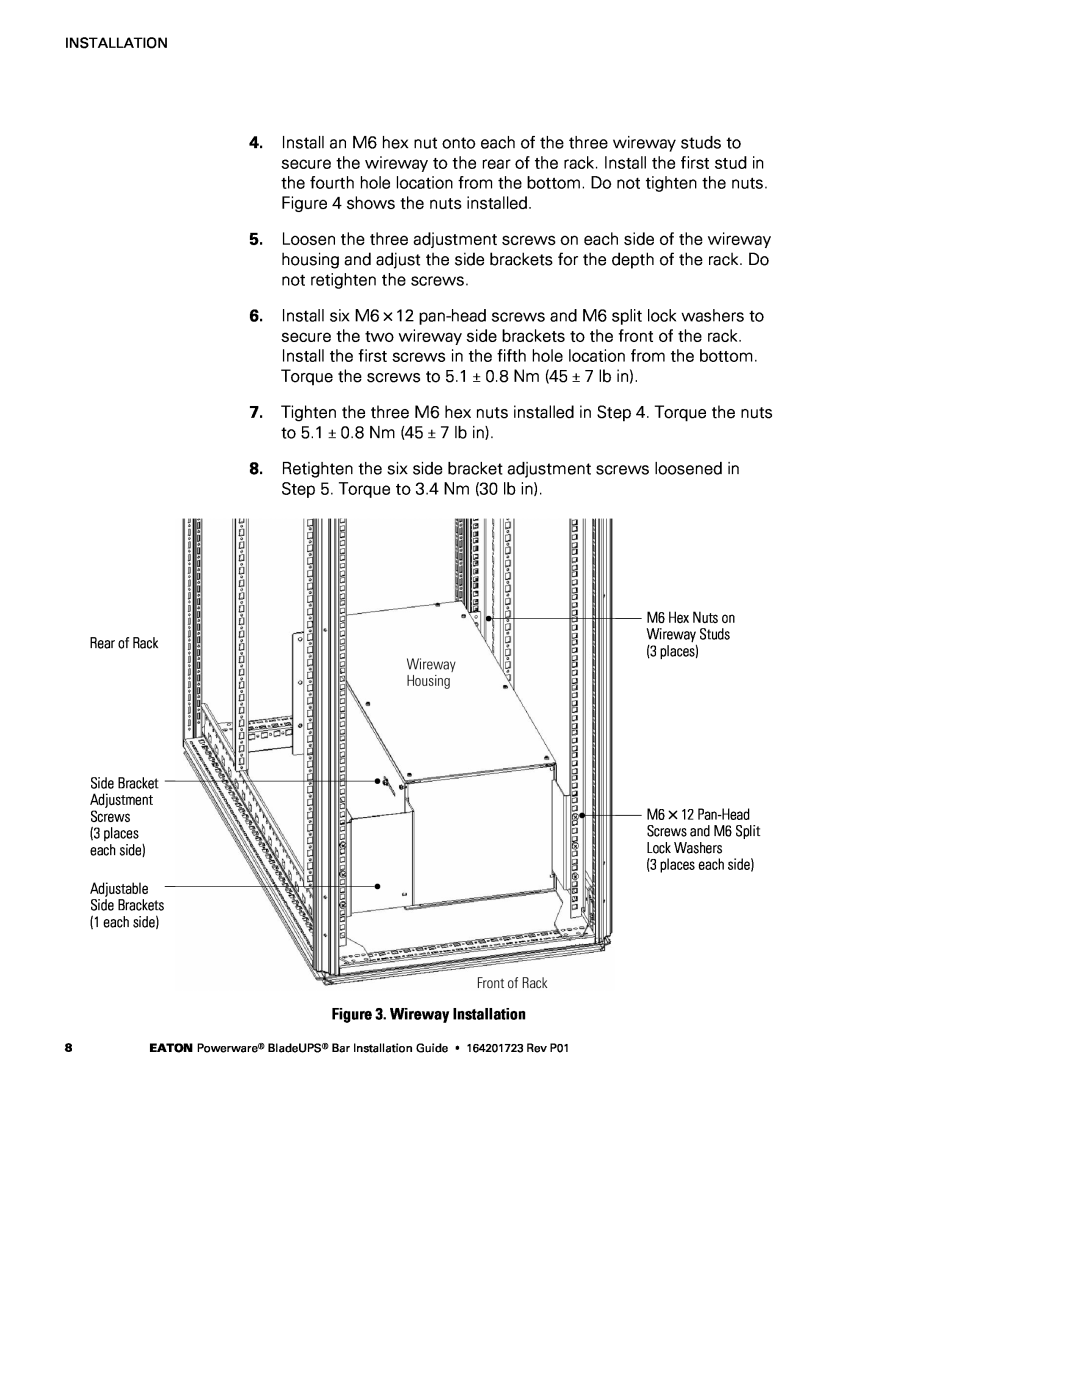 Eaton Electrical BladeUPS Bar manual Wireway Installation, INSTALLATION Rear of Rack, places Wireway Housing 